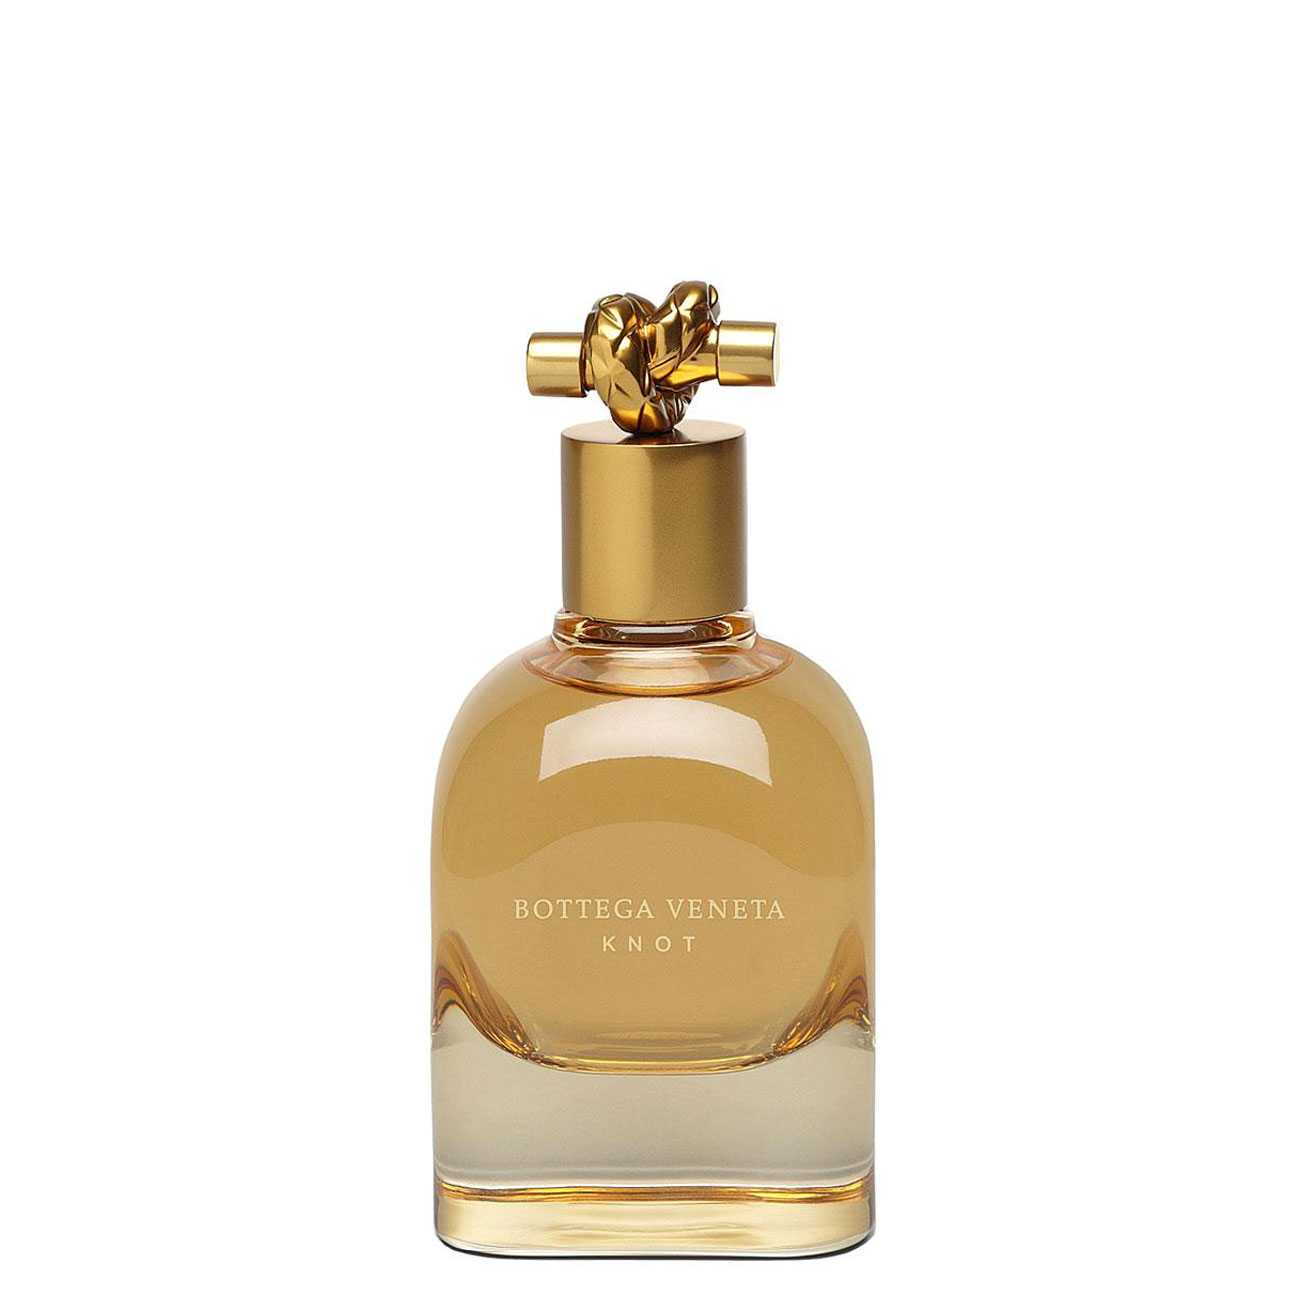 Apa de Parfum Bottega Veneta KNOT 75ml cu comanda online